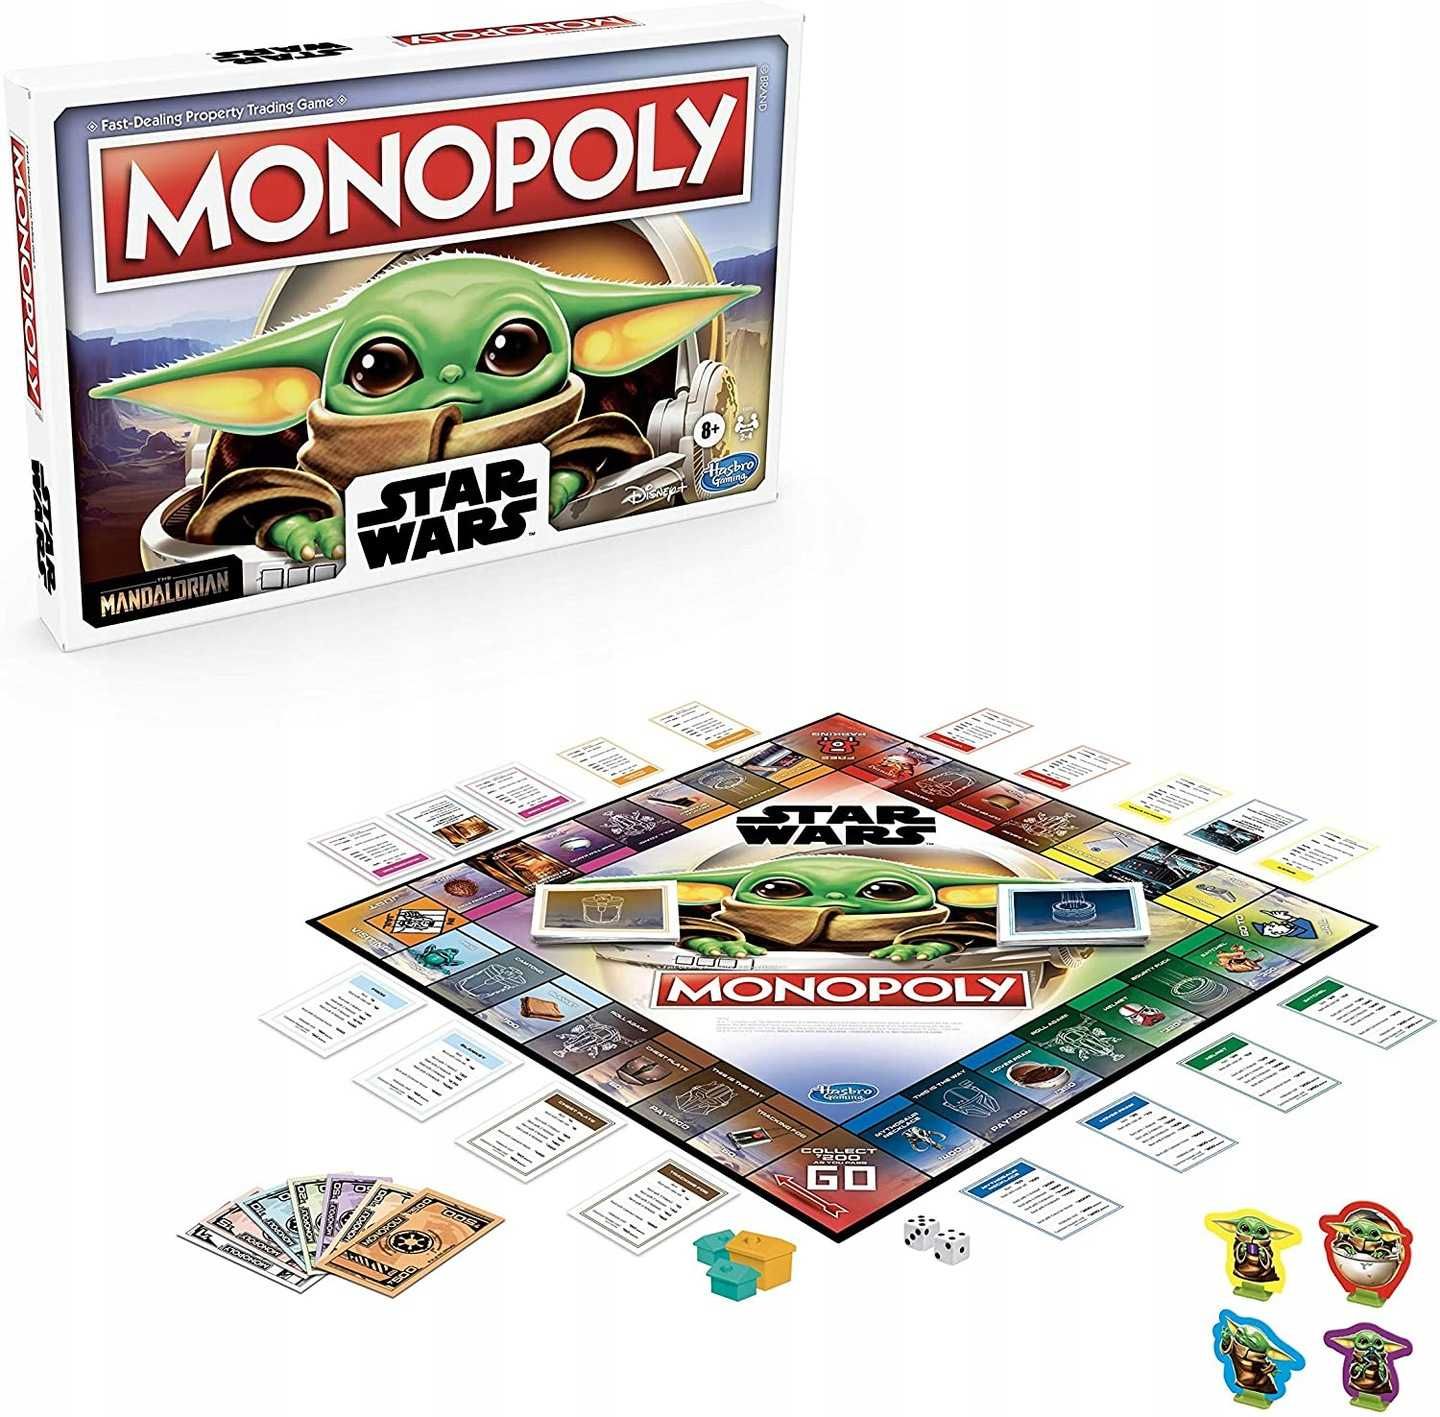 Monopoly Star Wars Mandalorian